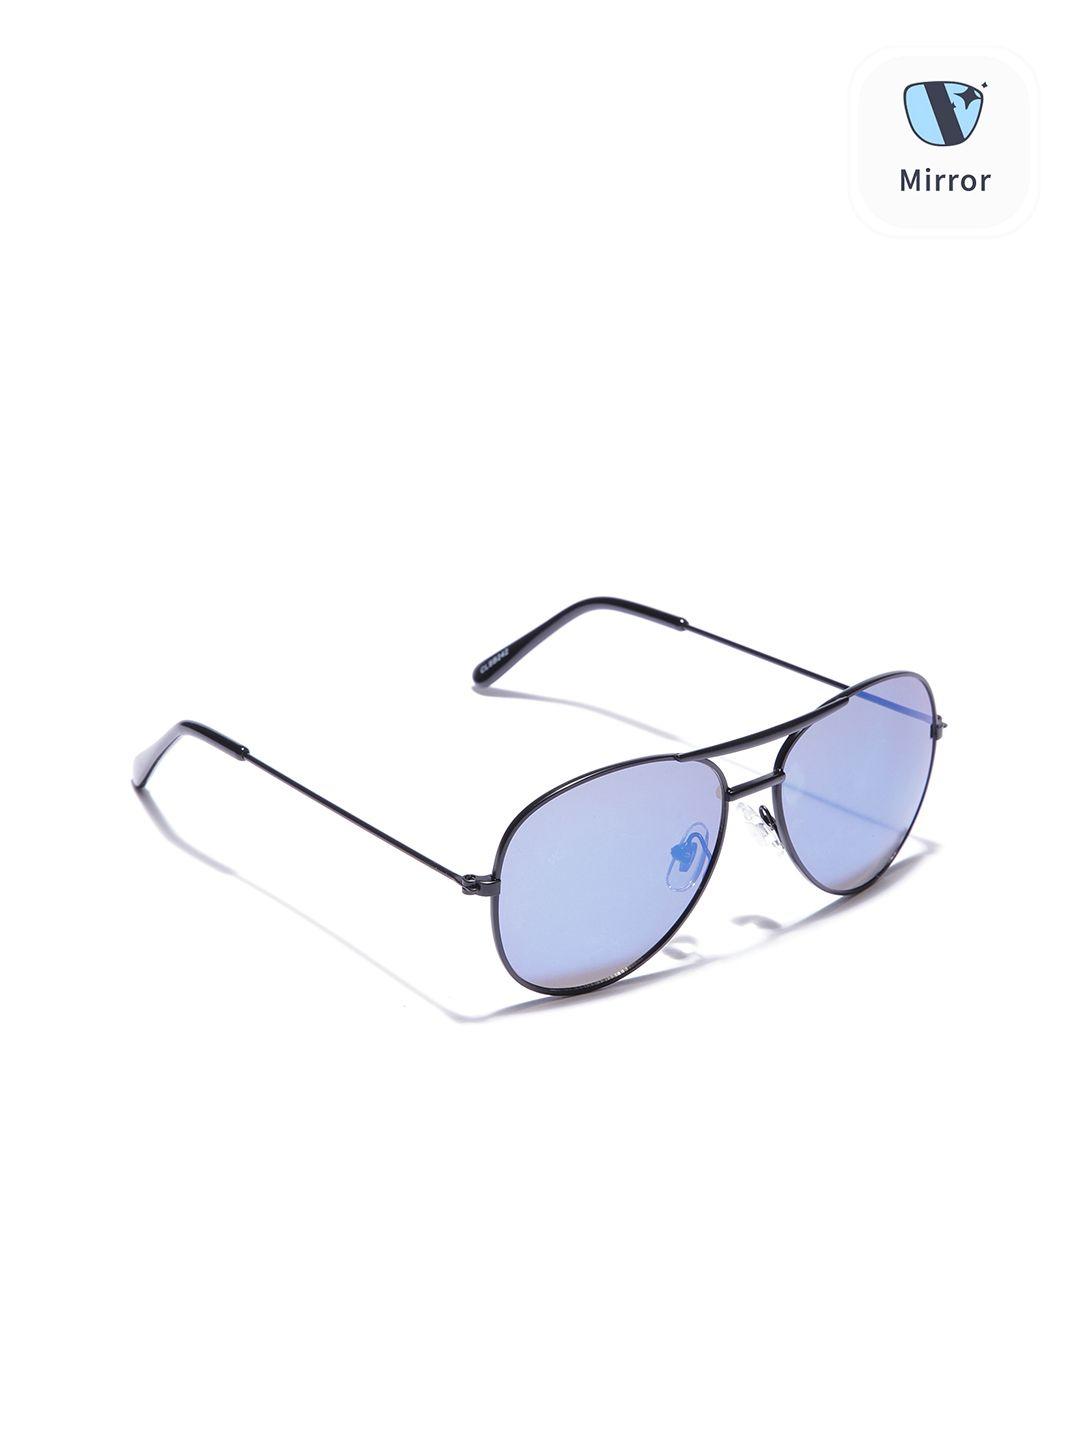 carlton london boys blue lens & black aviator sunglasses with uv protected lens clsb242